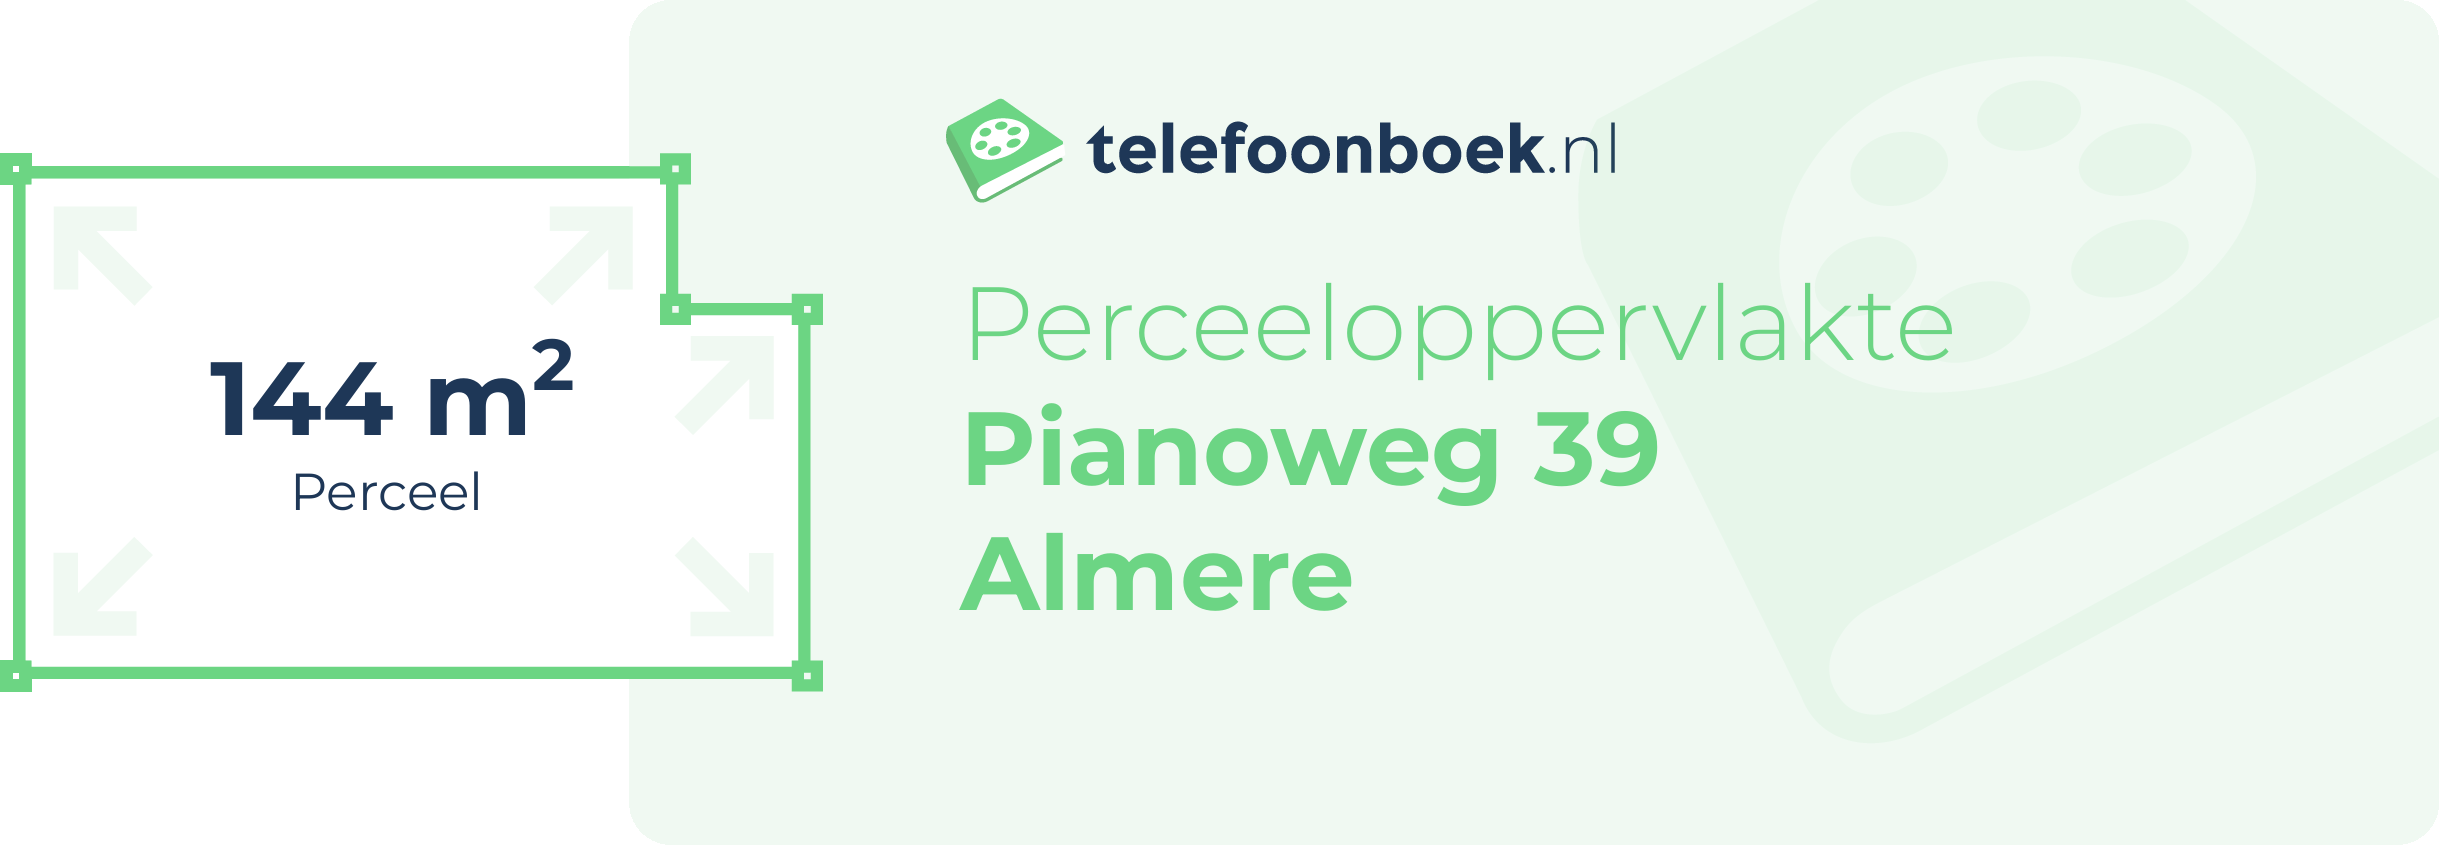 Perceeloppervlakte Pianoweg 39 Almere